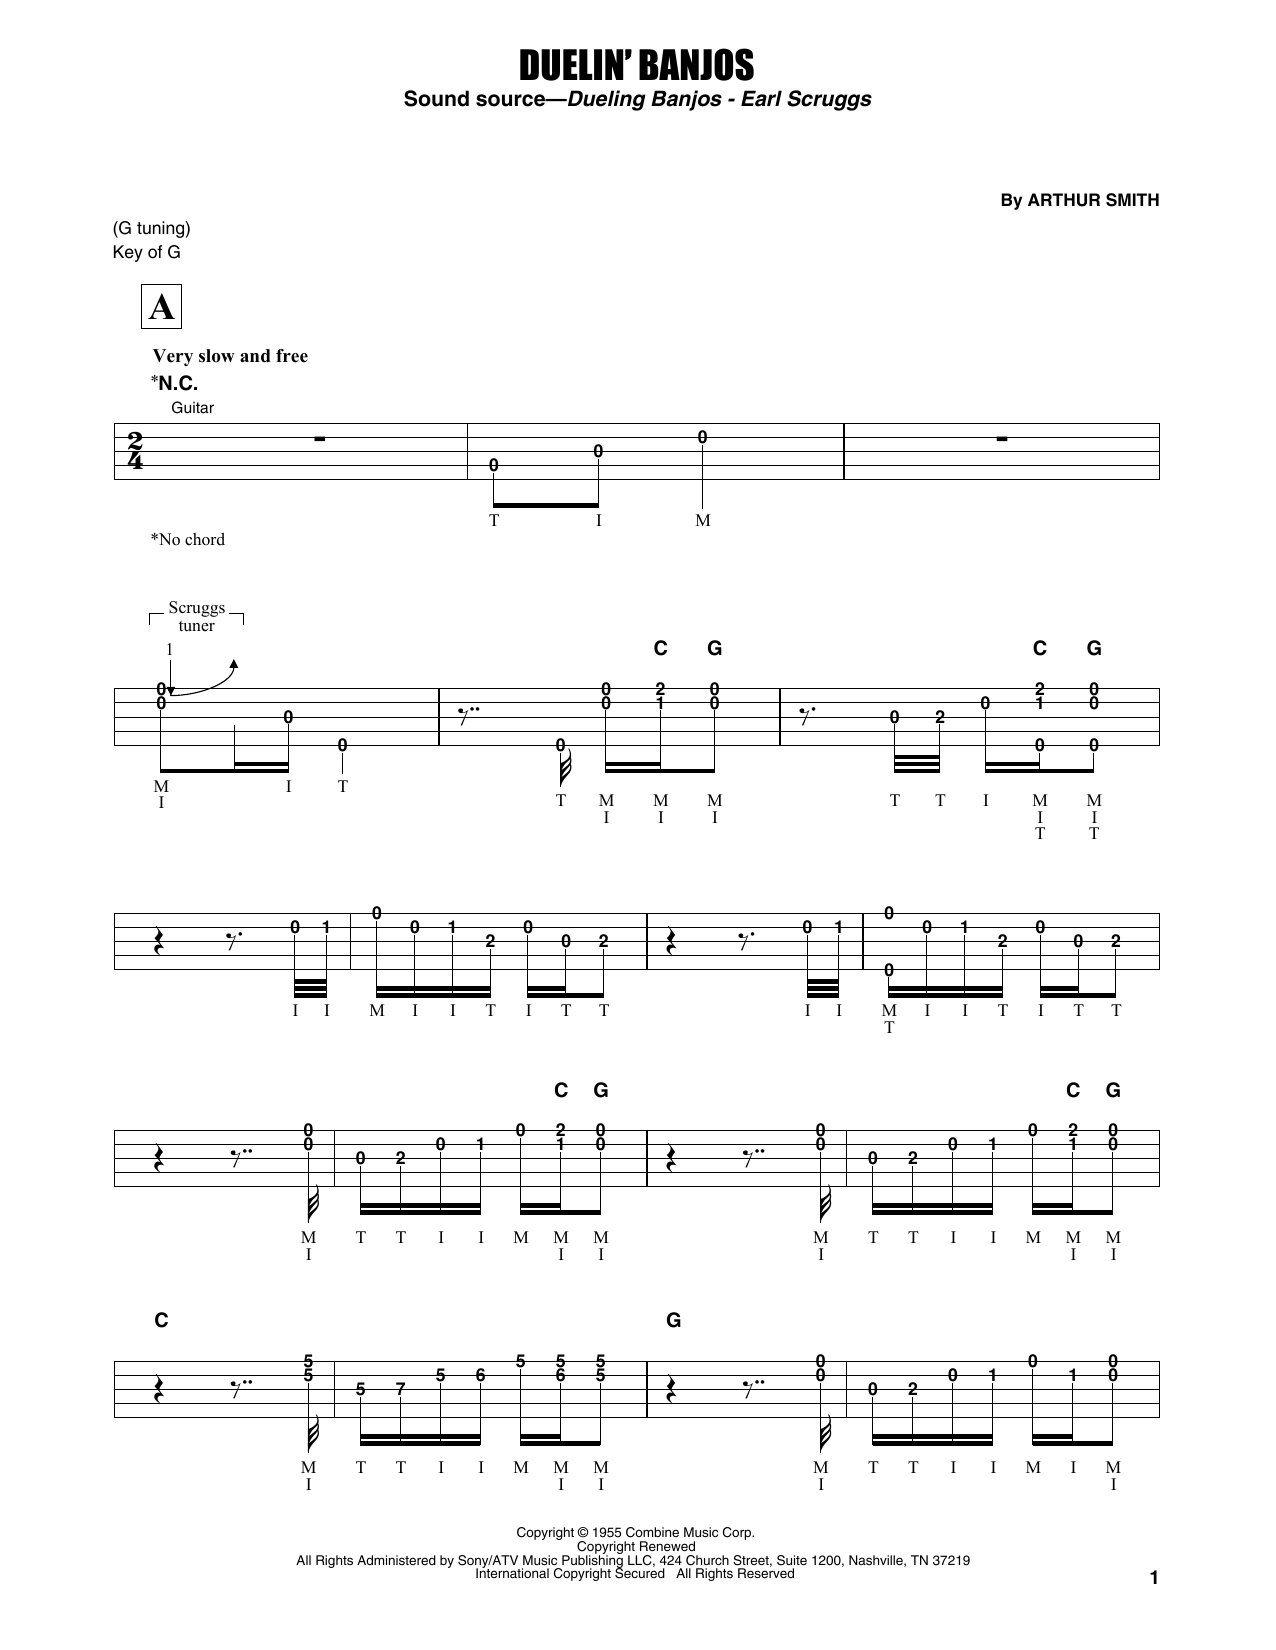 Earl Scruggs Duelin' Banjos Sheet Music Notes & Chords for Banjo Tab - Download or Print PDF